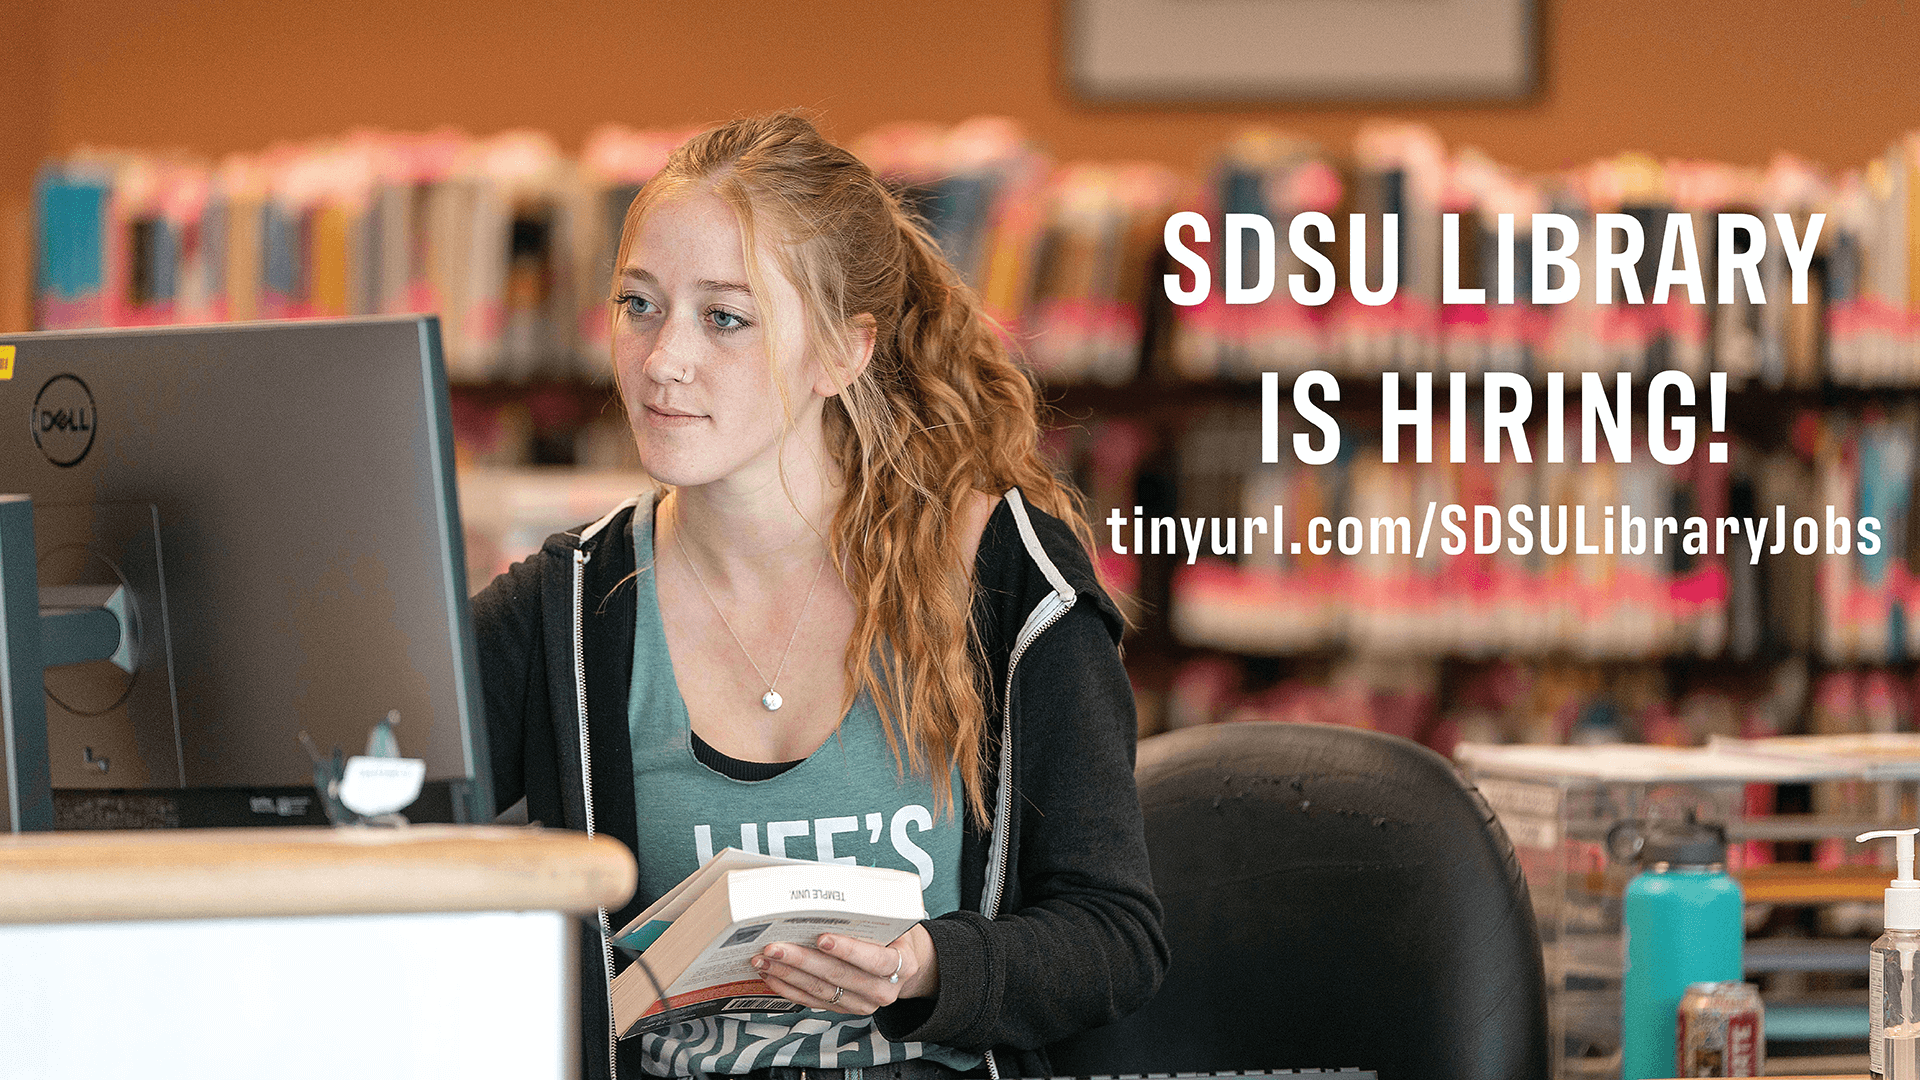 SDSU Library is hiring